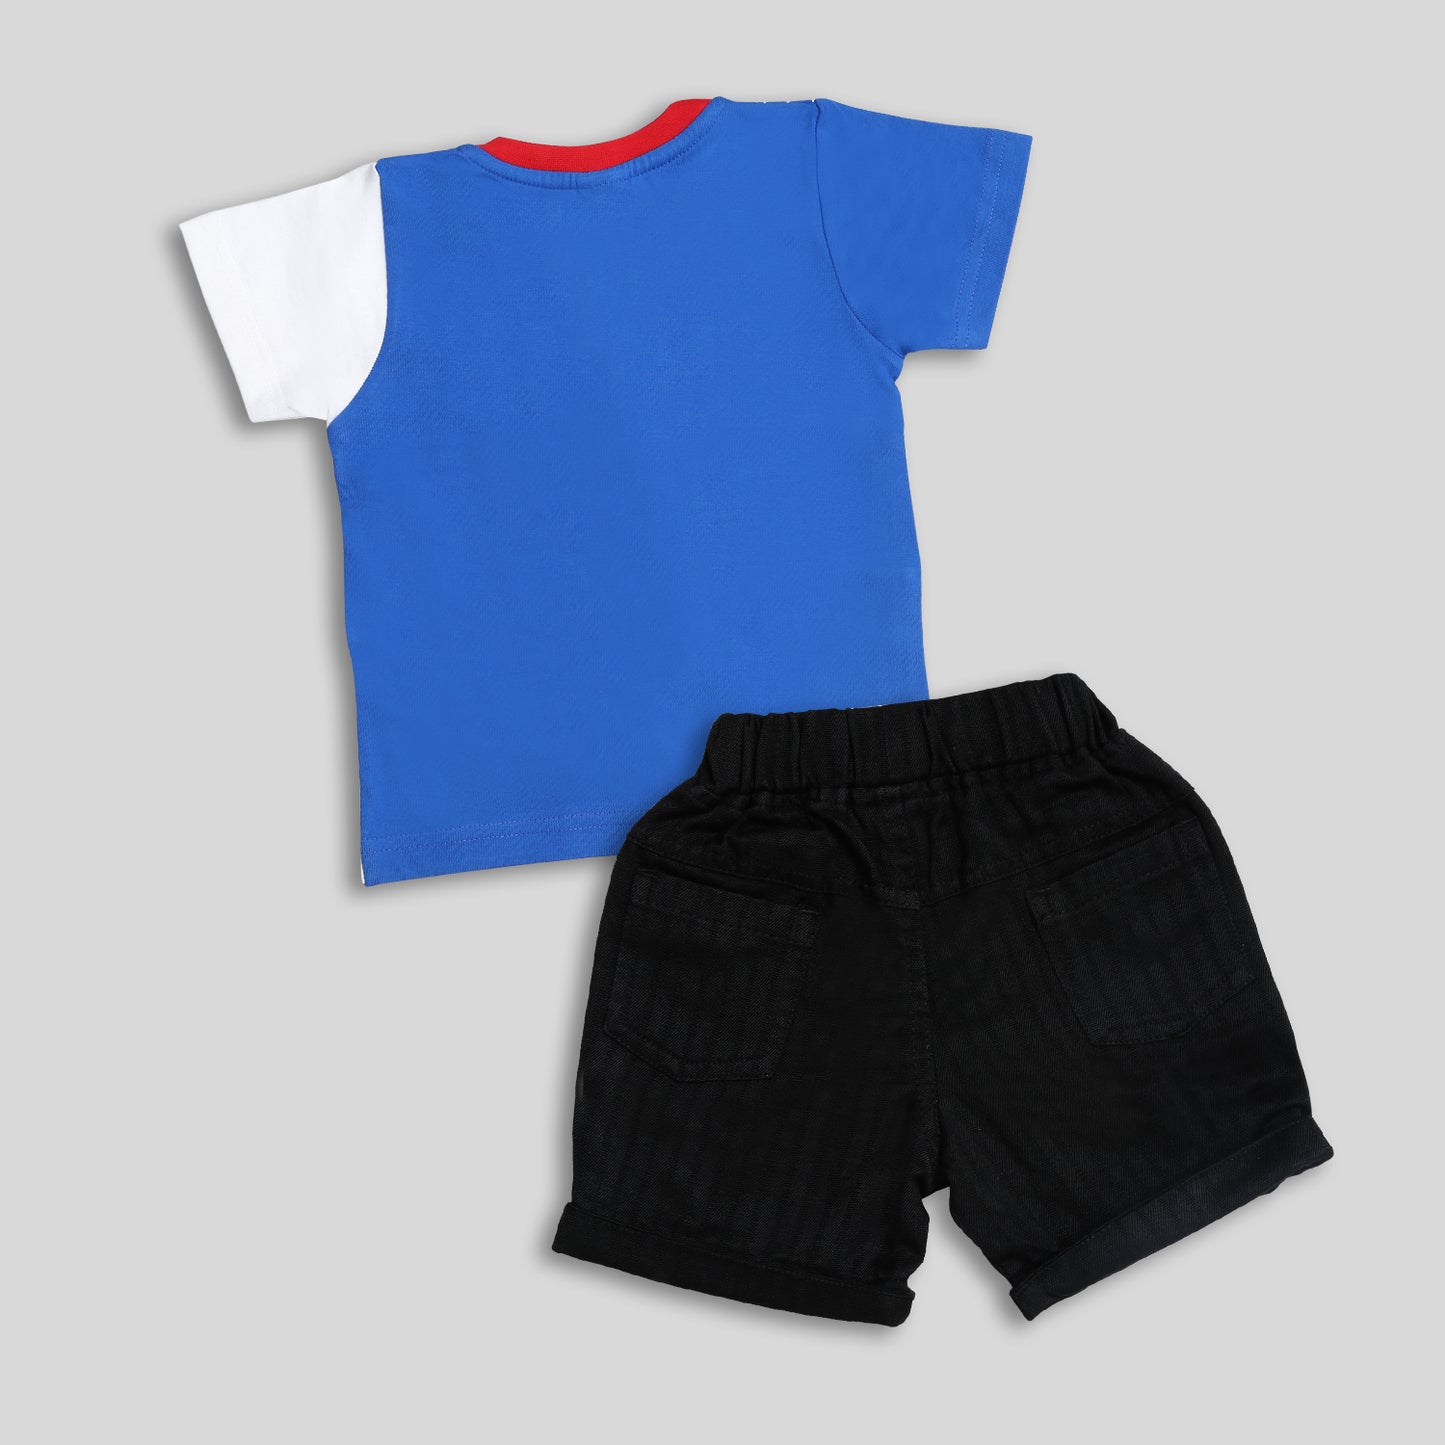 Bad Boys Shorts set for Little boys